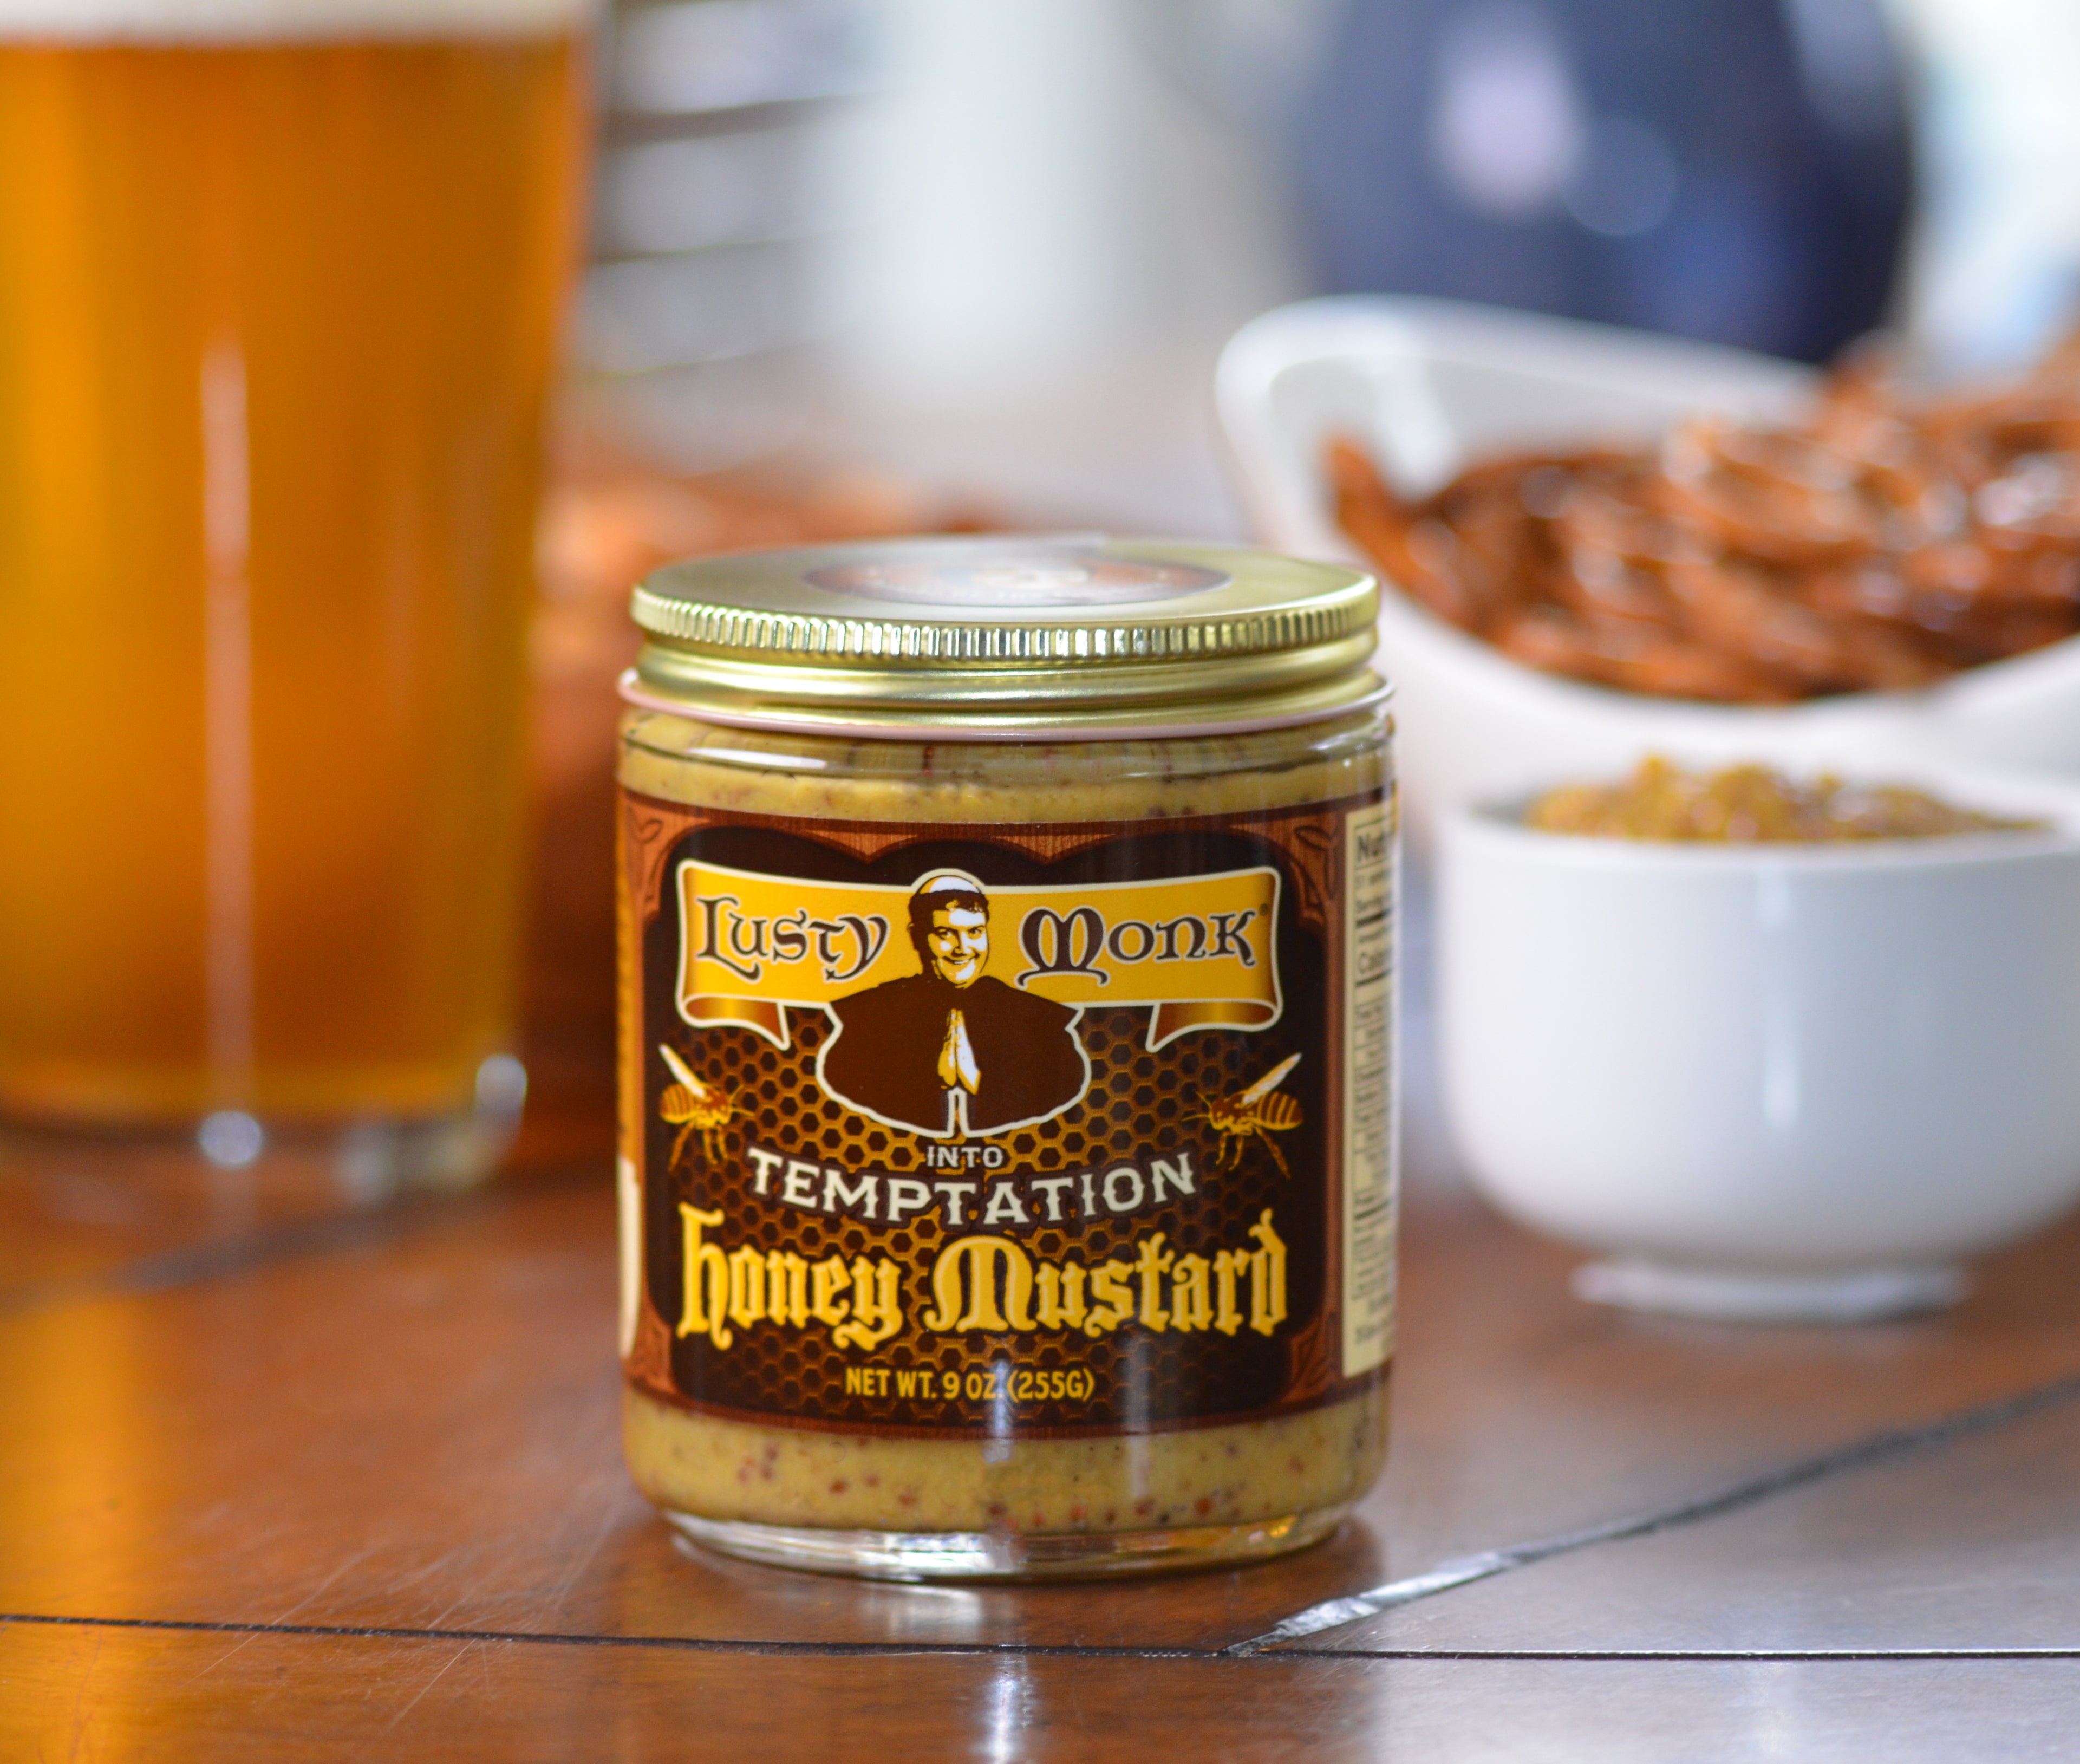 Lusty Monk "Temptation" Honey Mustard